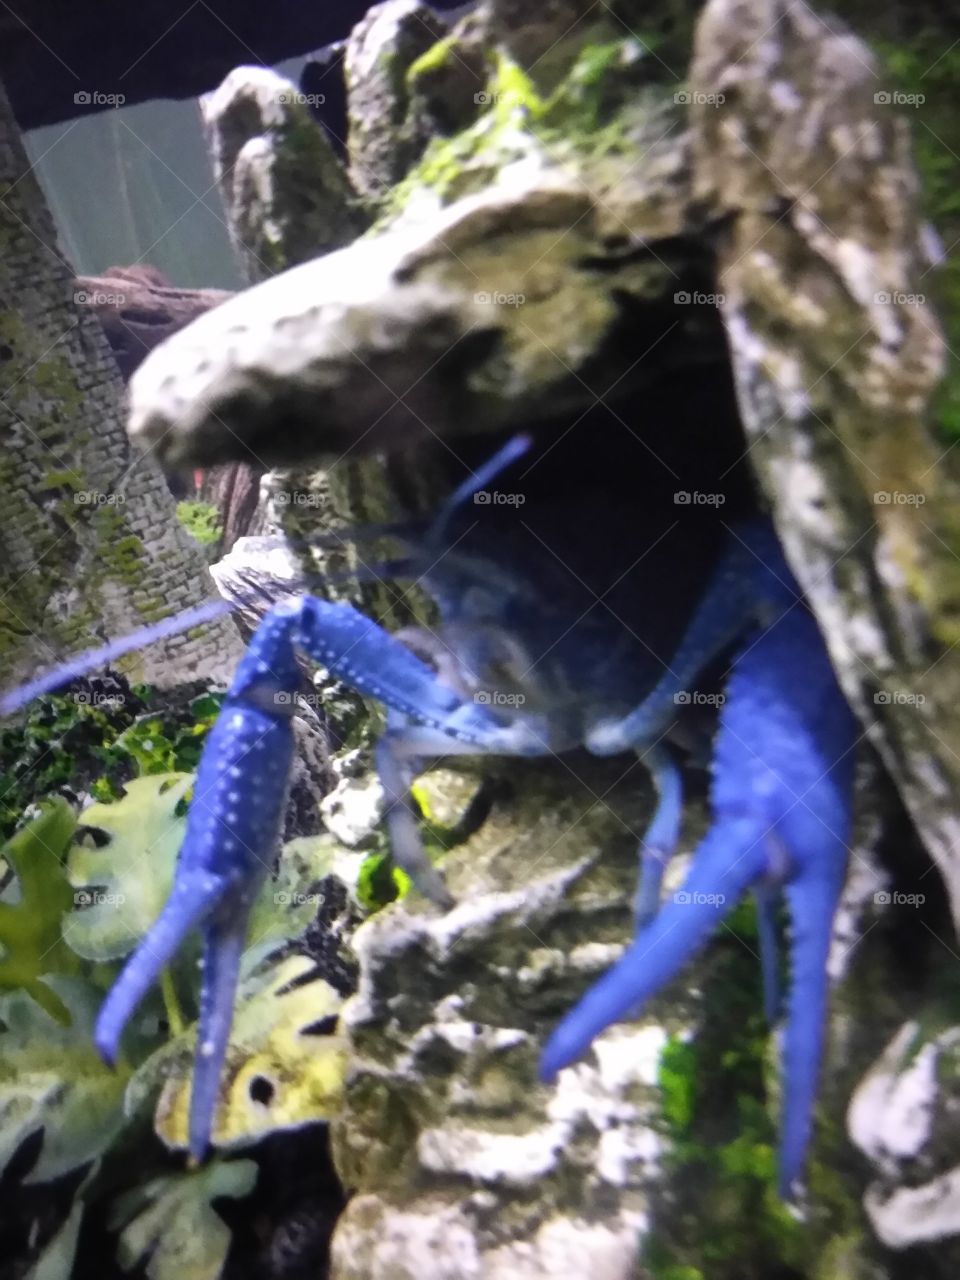 Blue crayfish inside tank